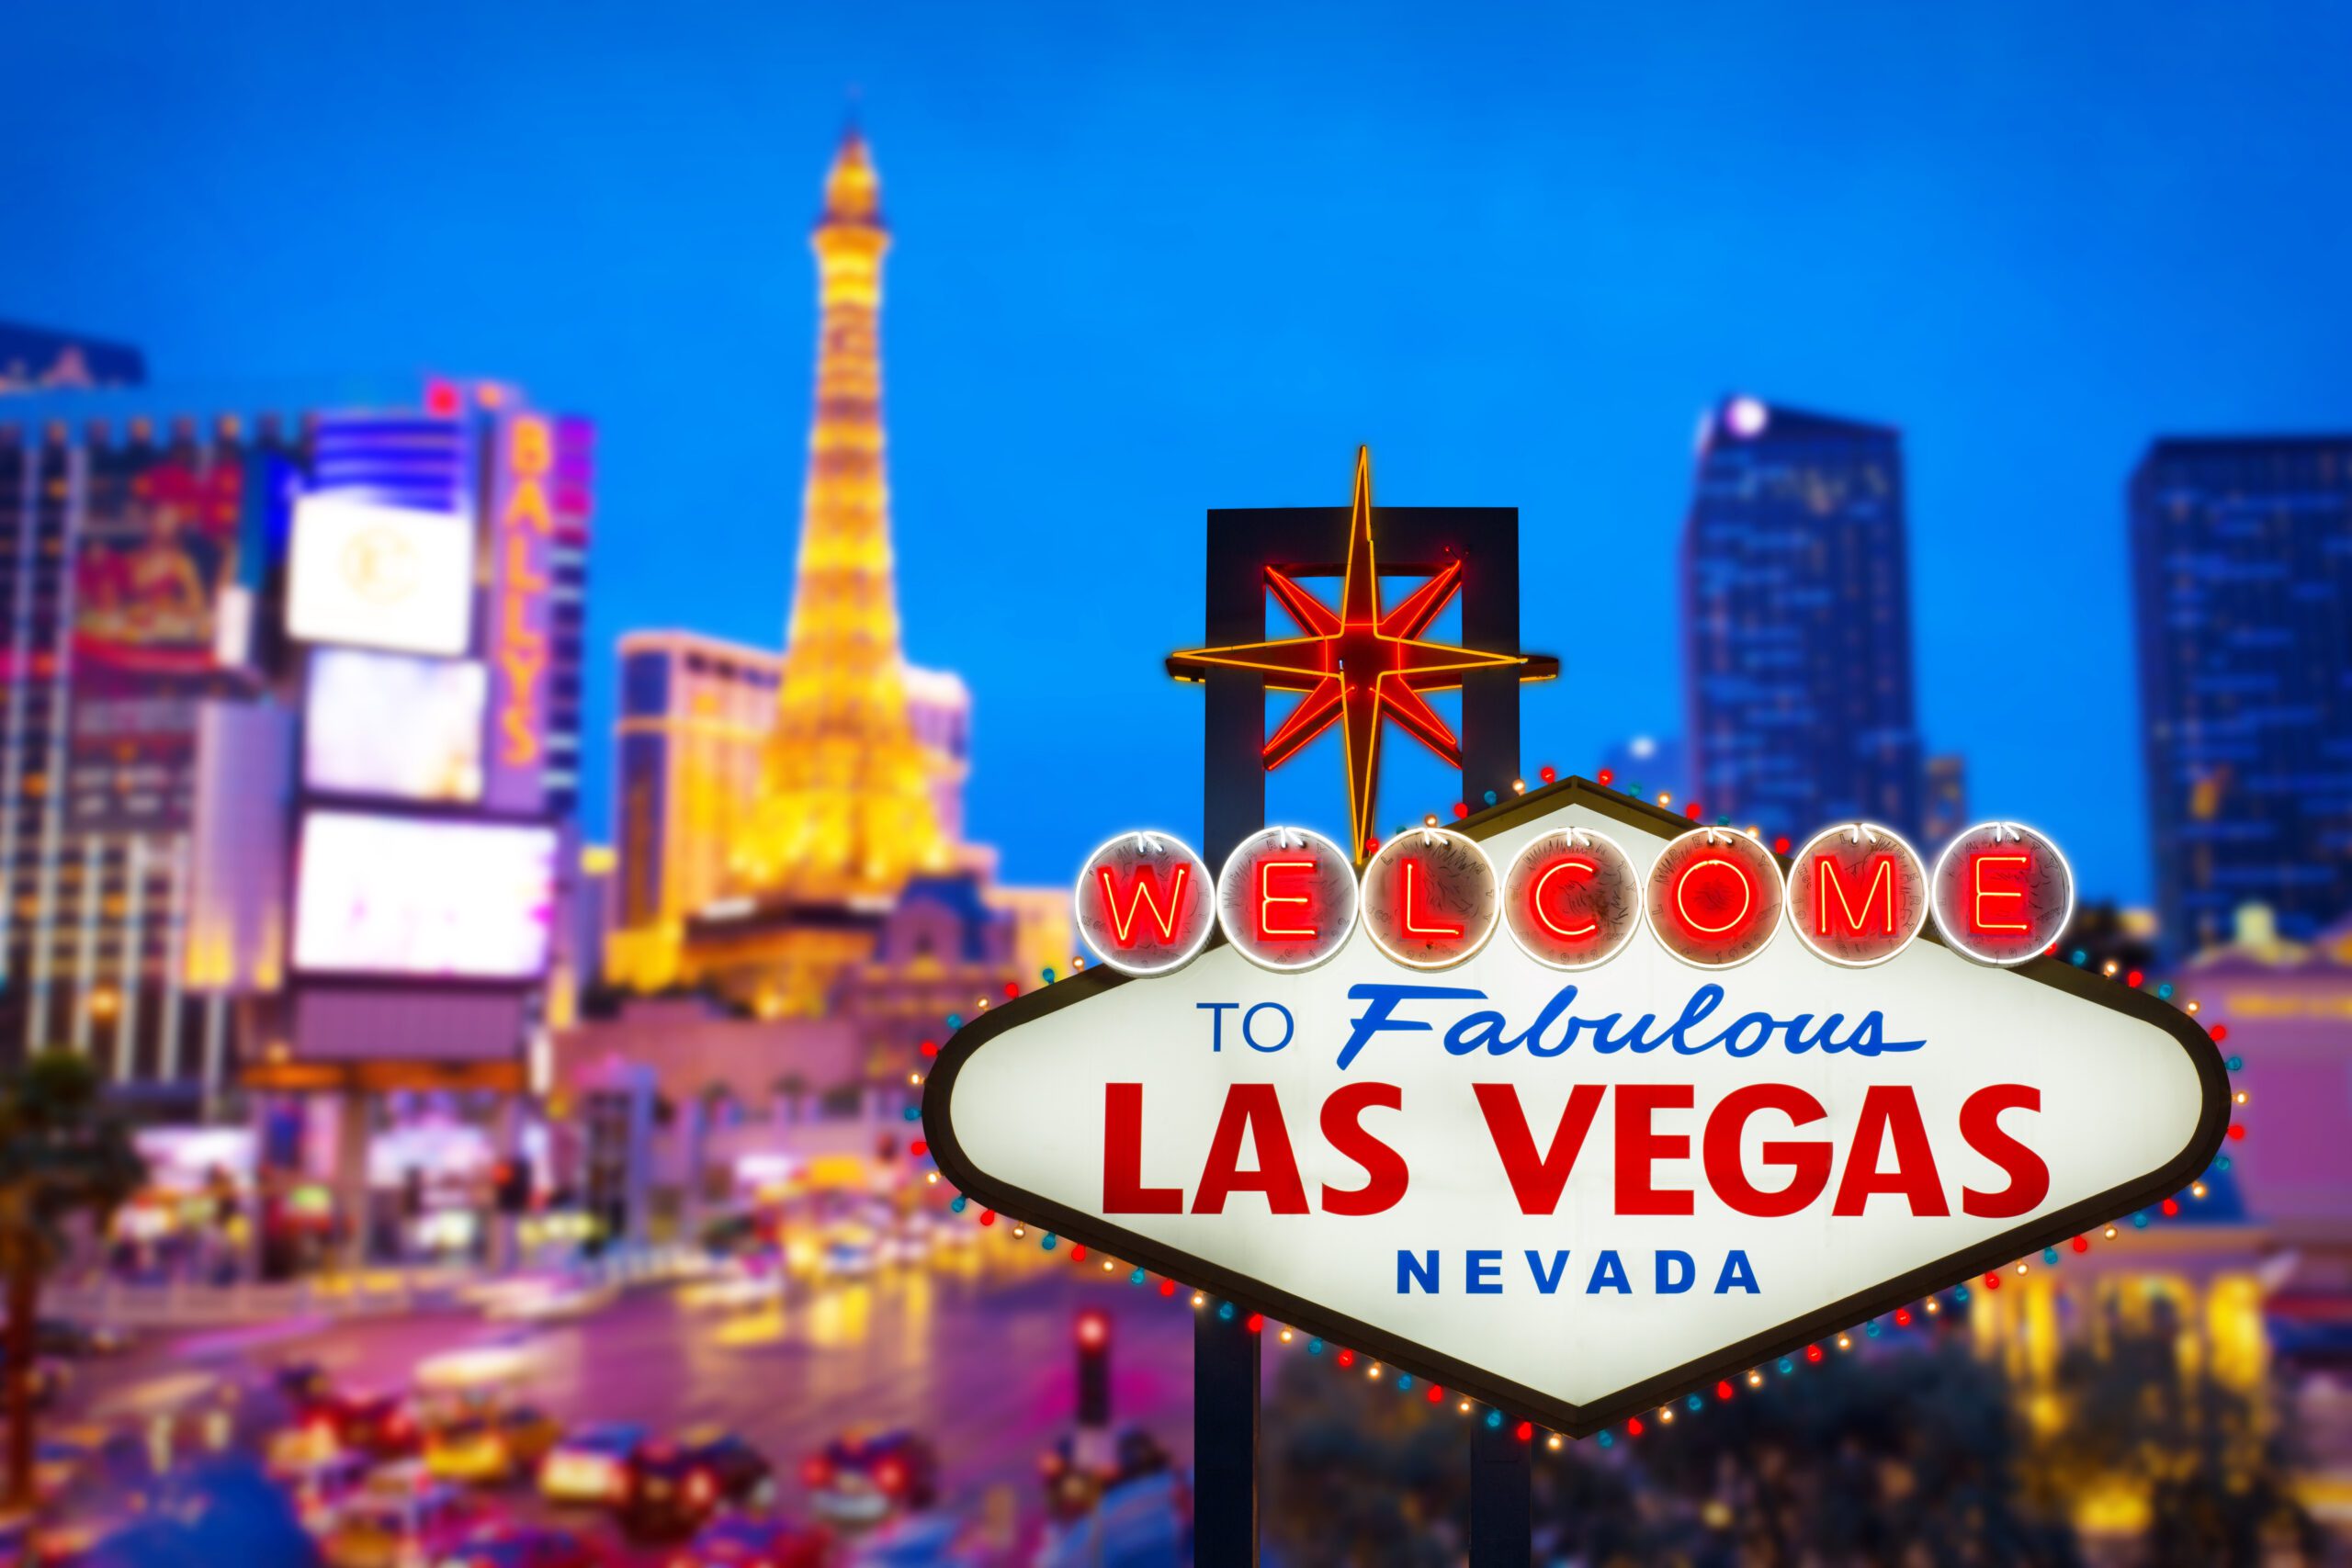 Las Vegas, Nevada Travel Guide